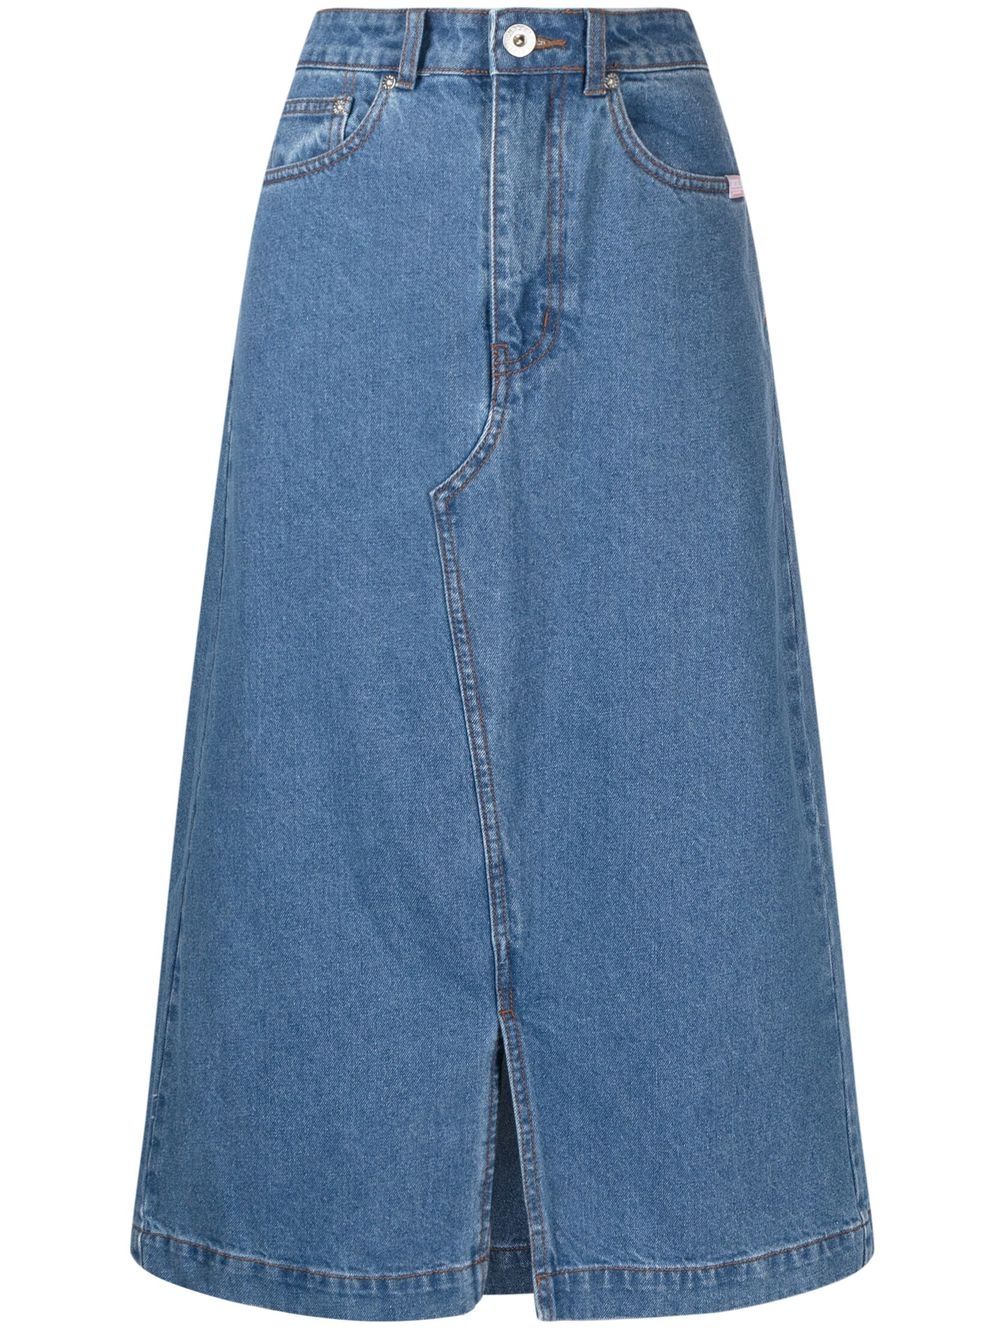 Elsa Hosk Wears The Perfect Denim Skirt: Here's 10 To Shop